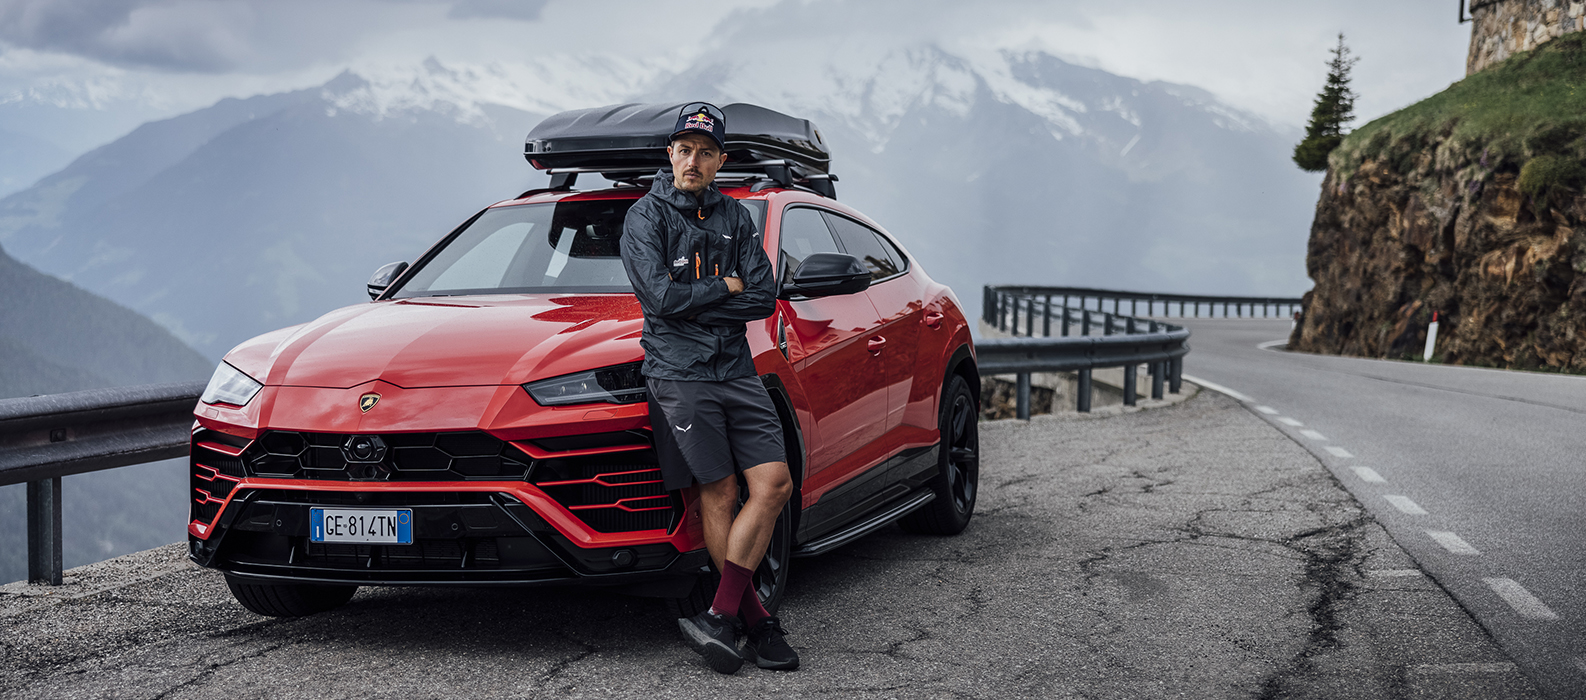 Lamborghini Urus And ron Durogati During The The Redbull X Alps